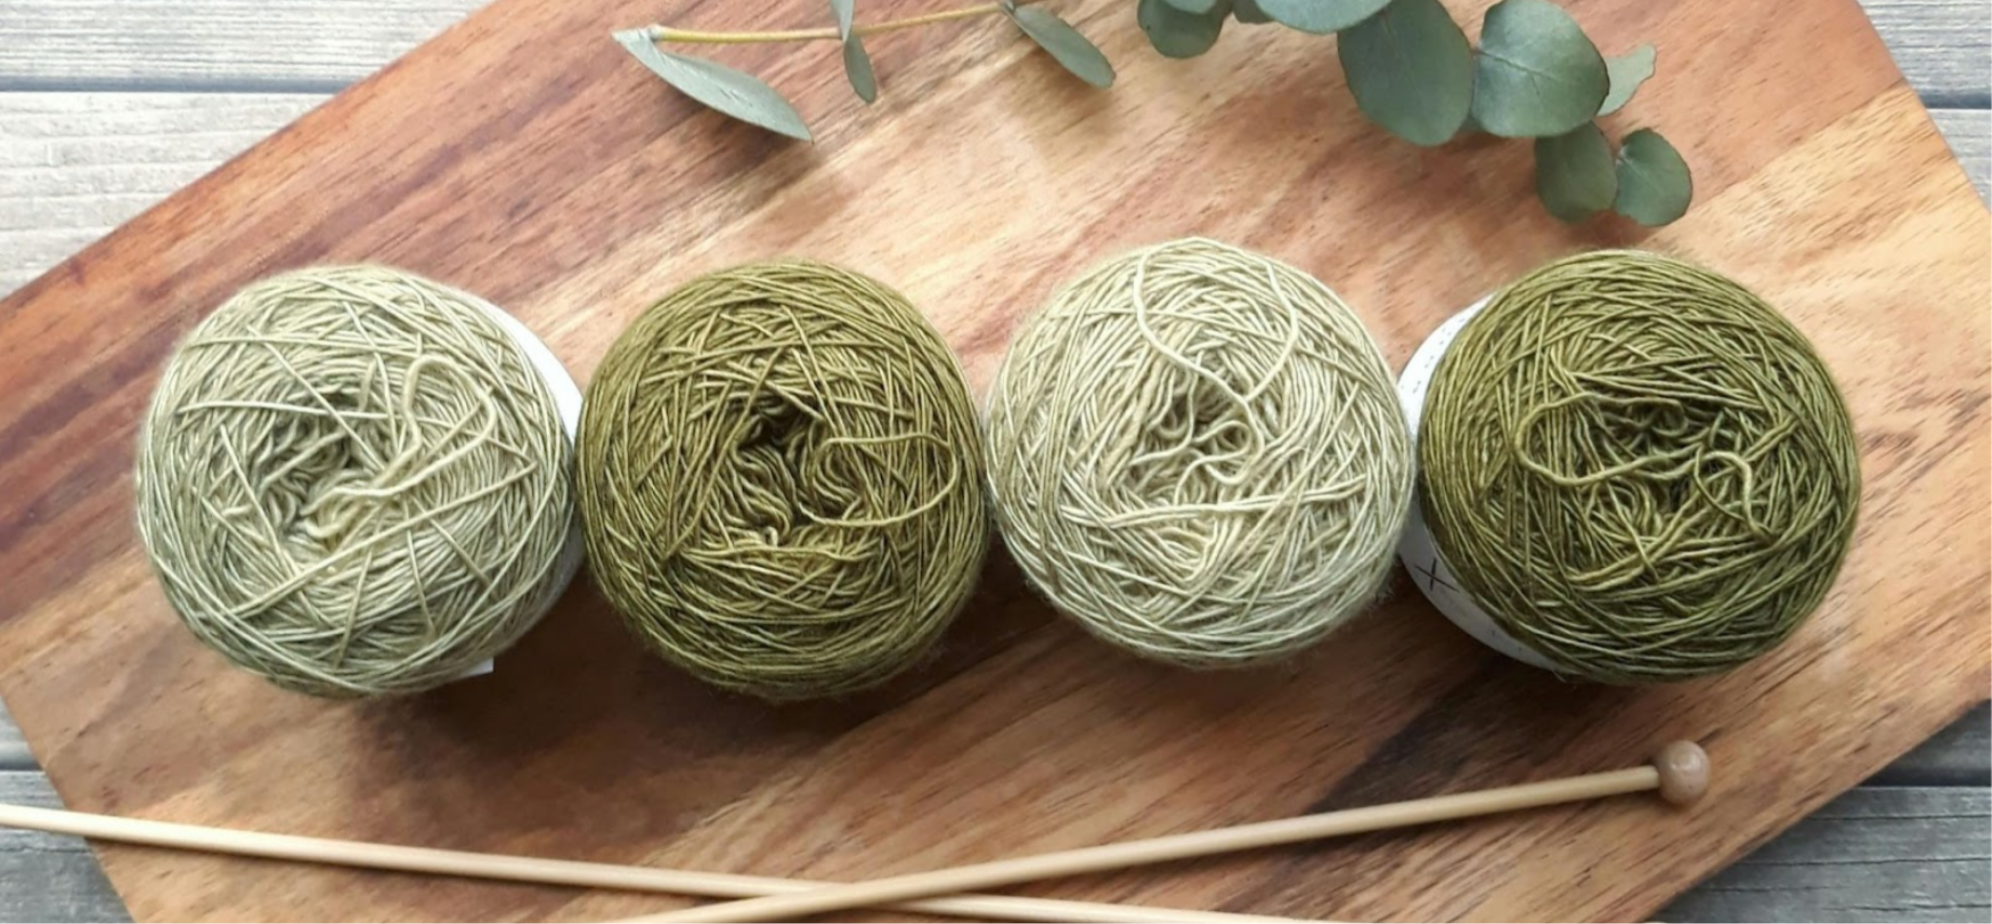 Balls of green yarn and knitting needles